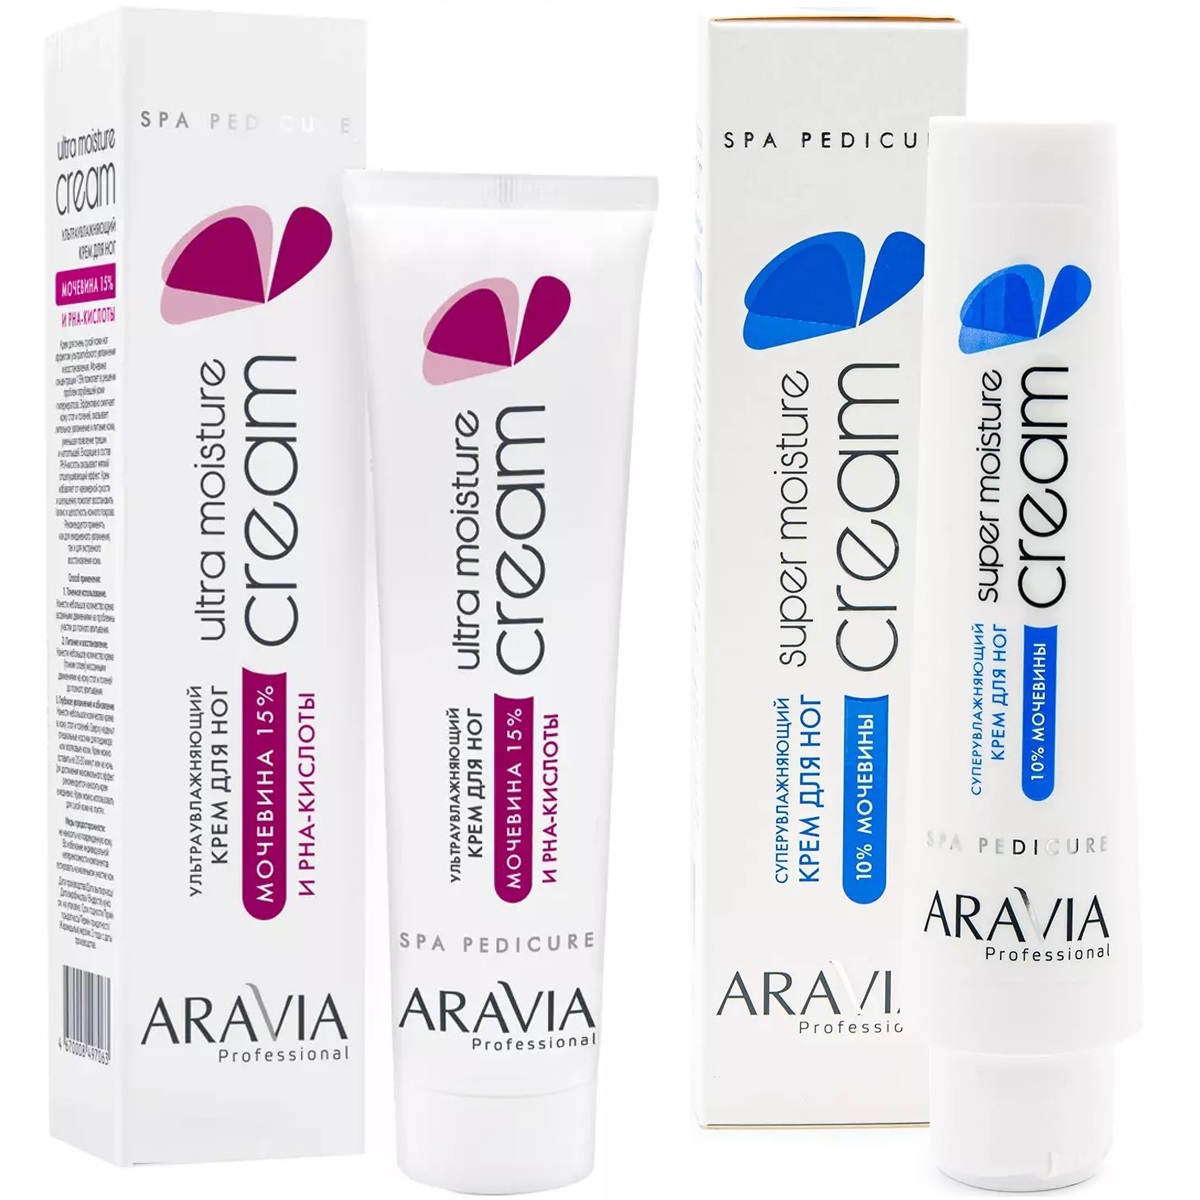 cosrx moisture power enriched cream крем для глубокого увлажнения кожи 50 мл Aravia Professional Набор для ухода за кожей ног: крем ультраувлажняющий, 100 мл + суперувлажняющий крем, 100 мл (Aravia Professional, SPA педикюр)